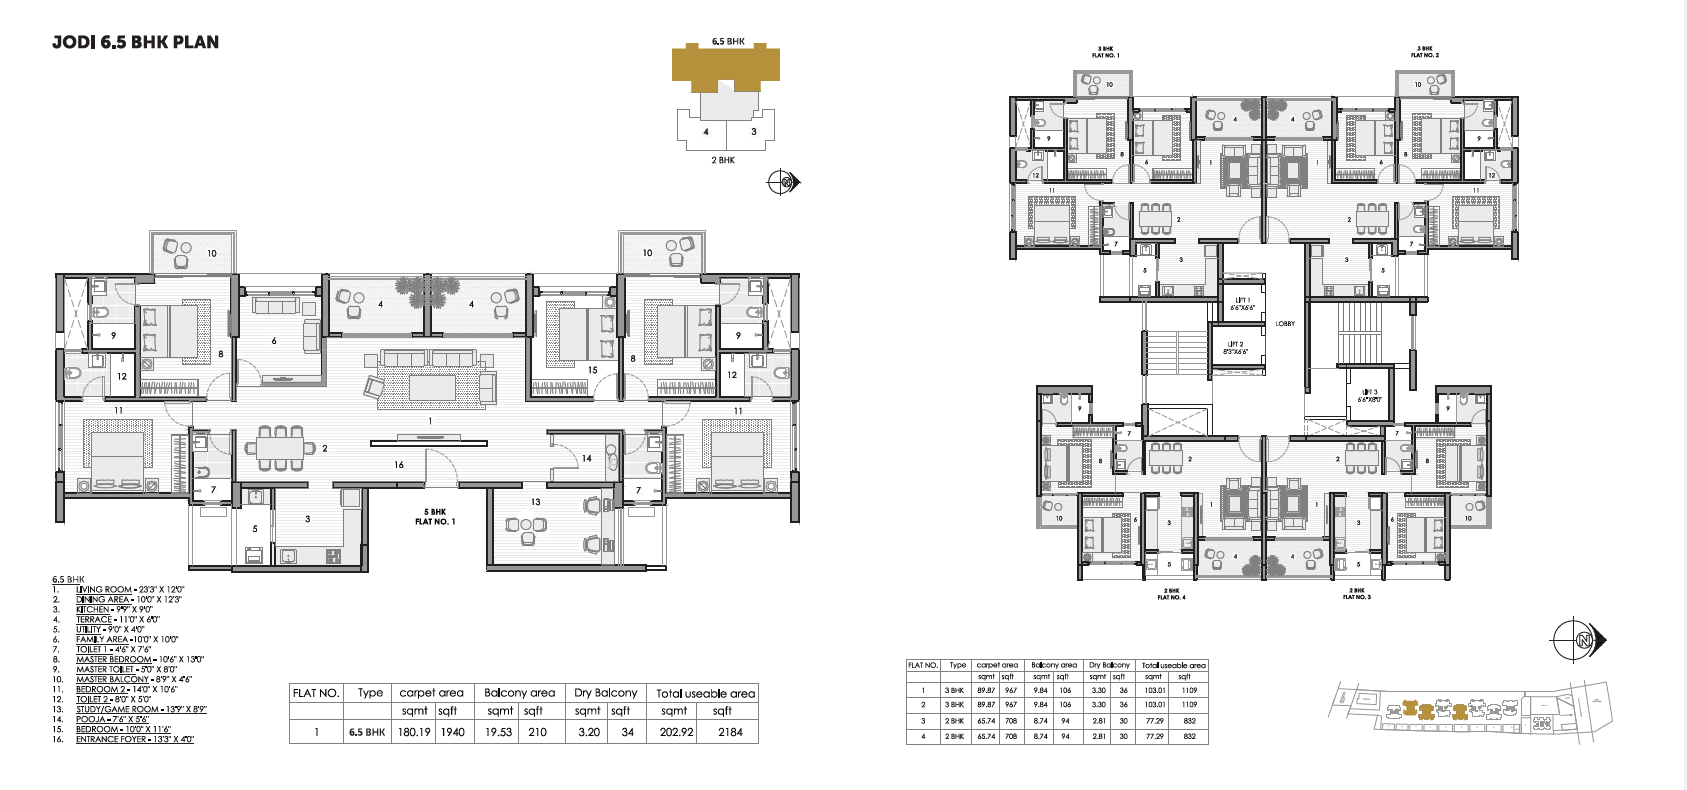 kunal the canary 6.5 bhk floor plan